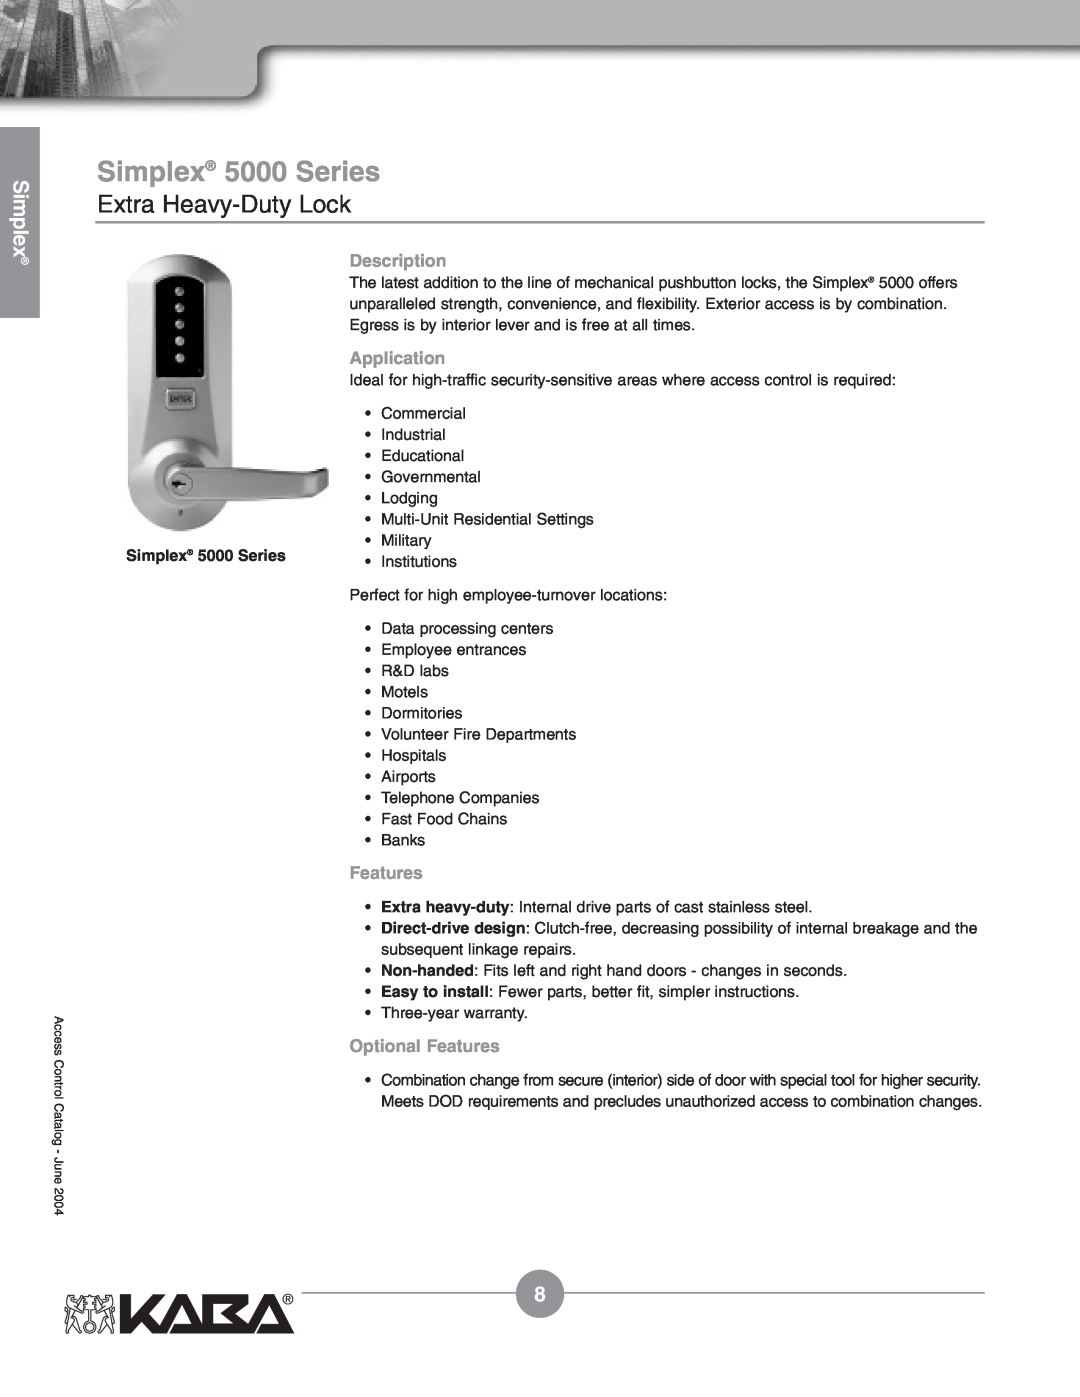 Assa Mechanical Pushbutton Locks manual Simplex 5000 Series, Extra Heavy-Duty Lock, Description, Application, Features 